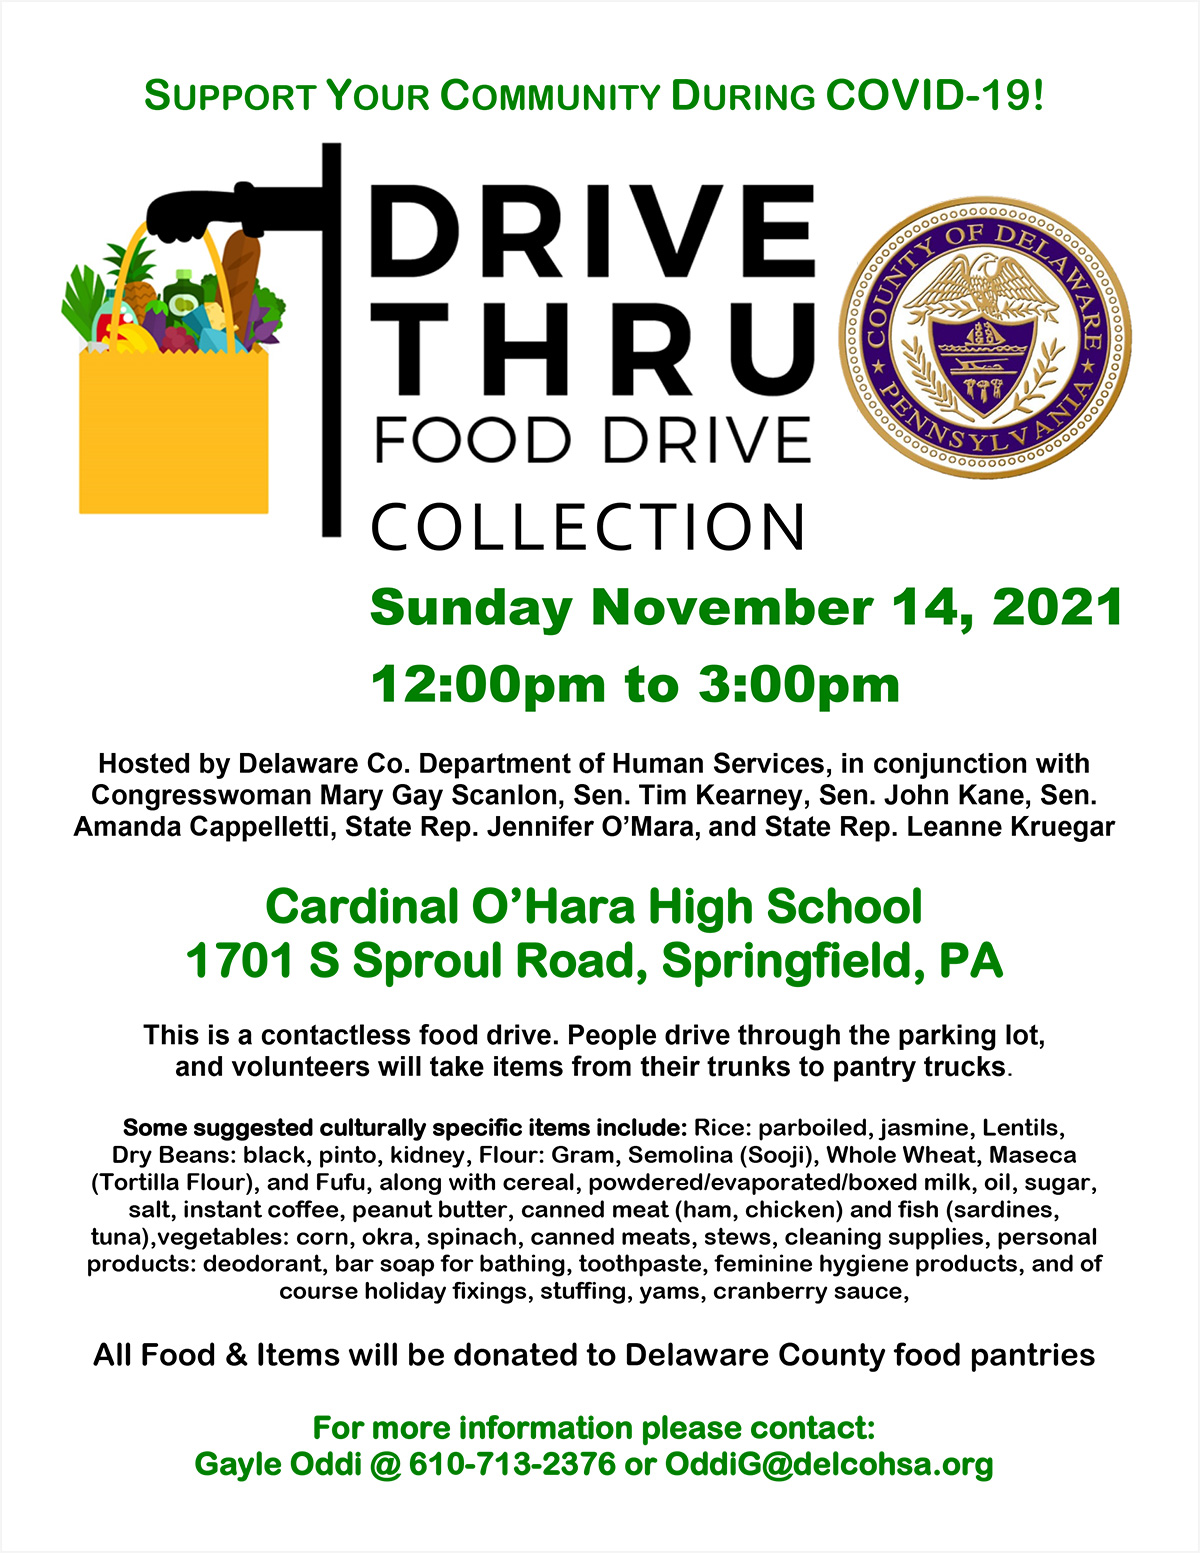 Drive Thru Food Drive Collection - November 14, 2021